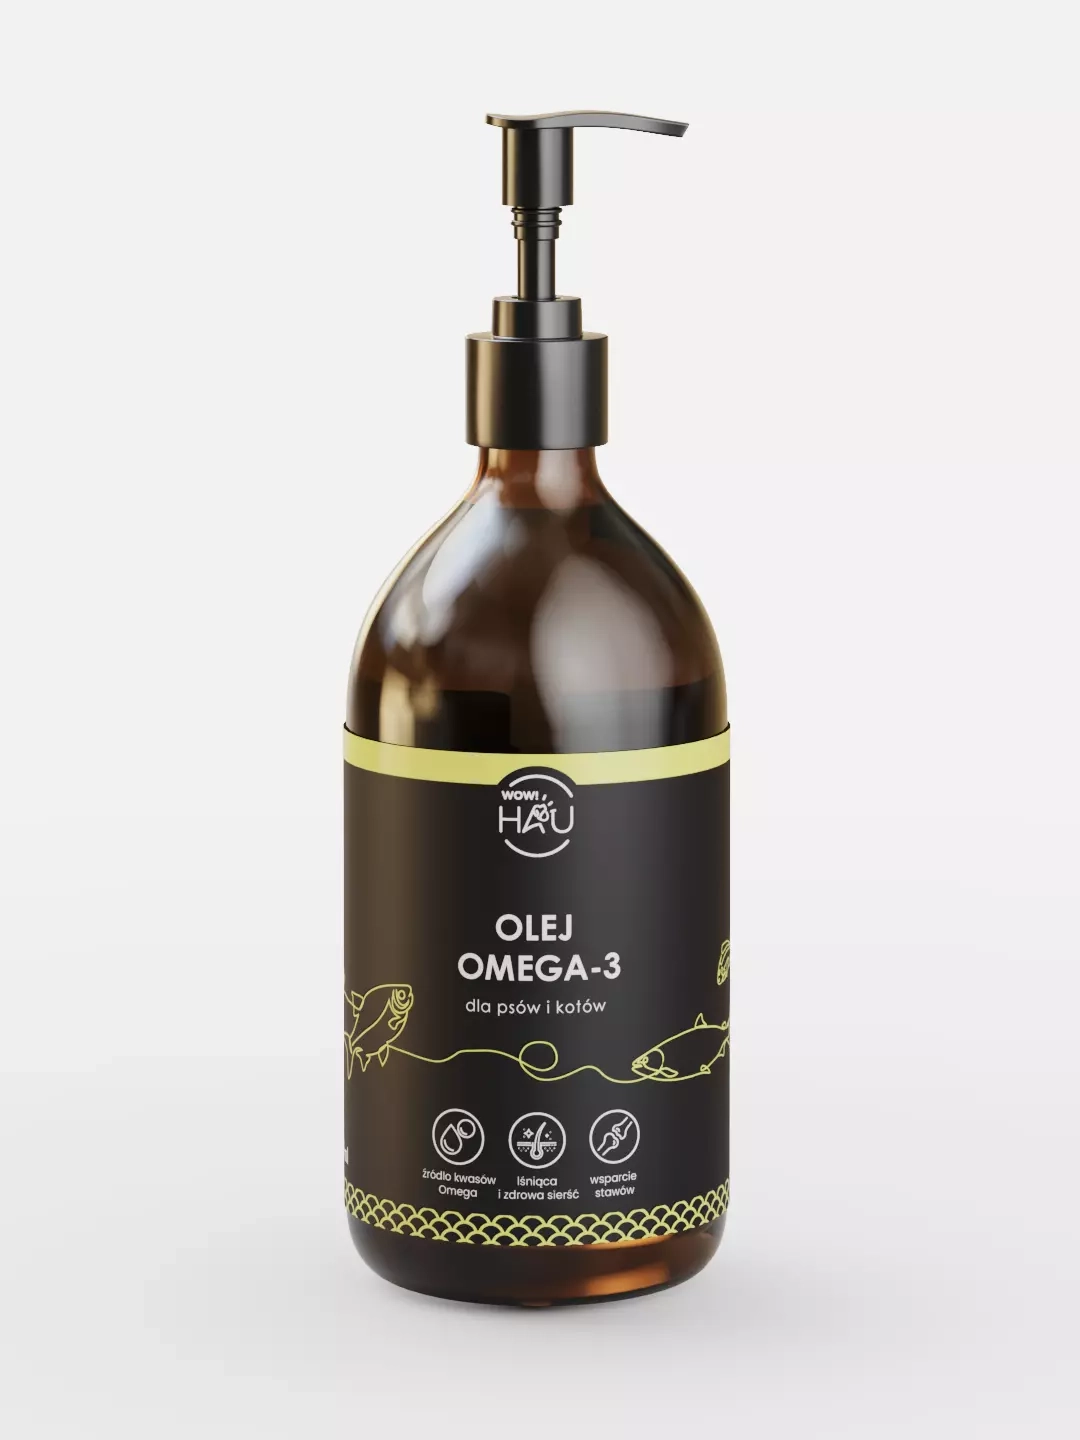 Olej omega-3, EPA, DHA - suplement dla psa i kota